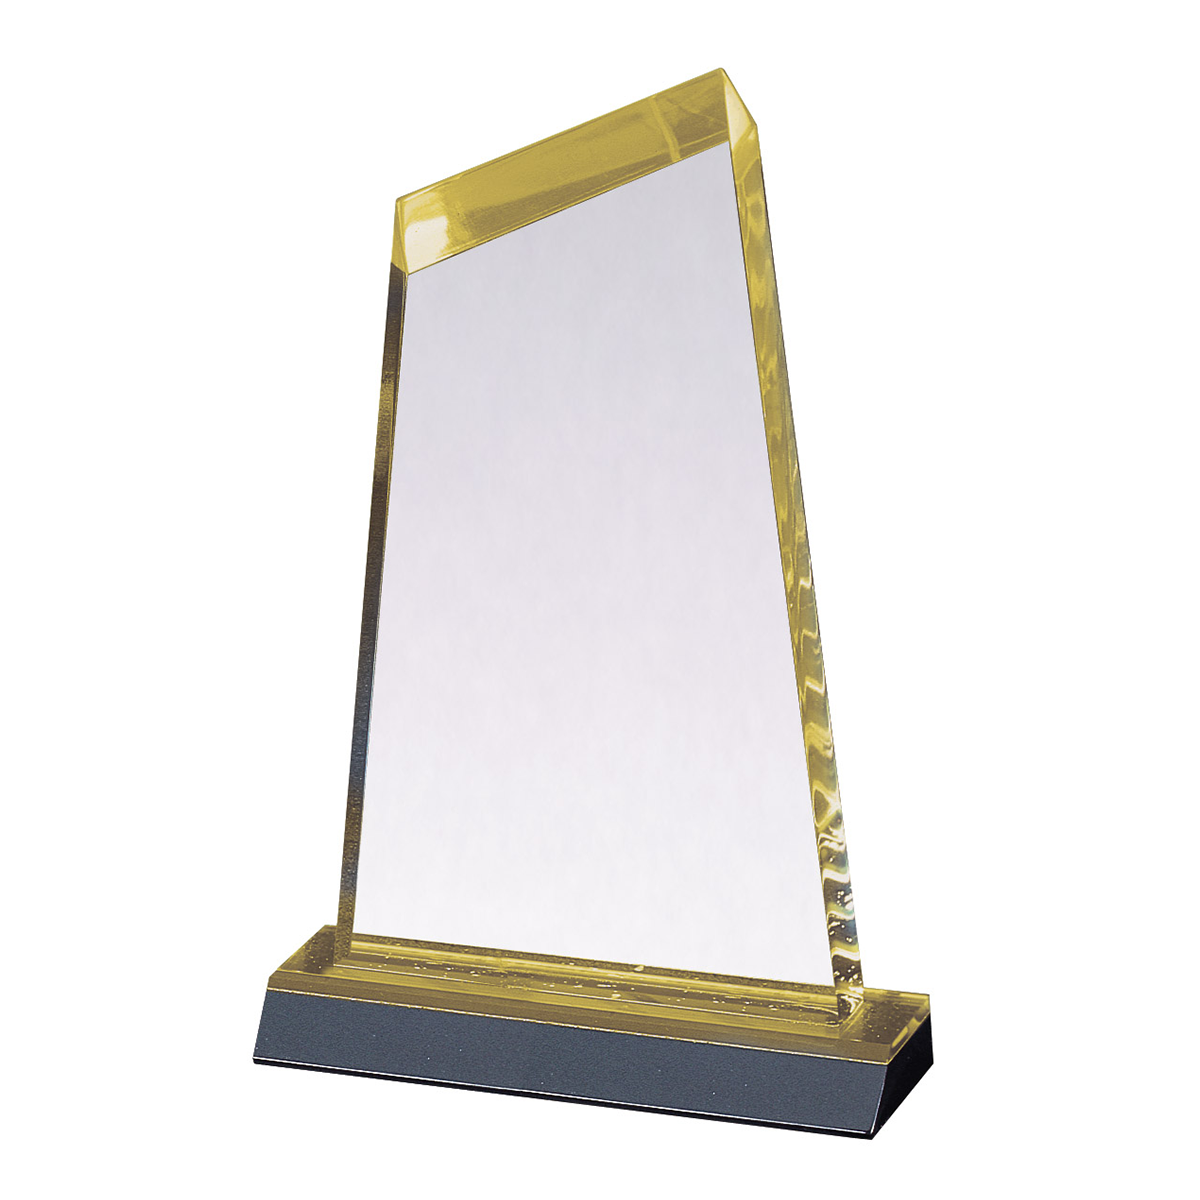 Mirror Series Peak Acrylic Award in Gold